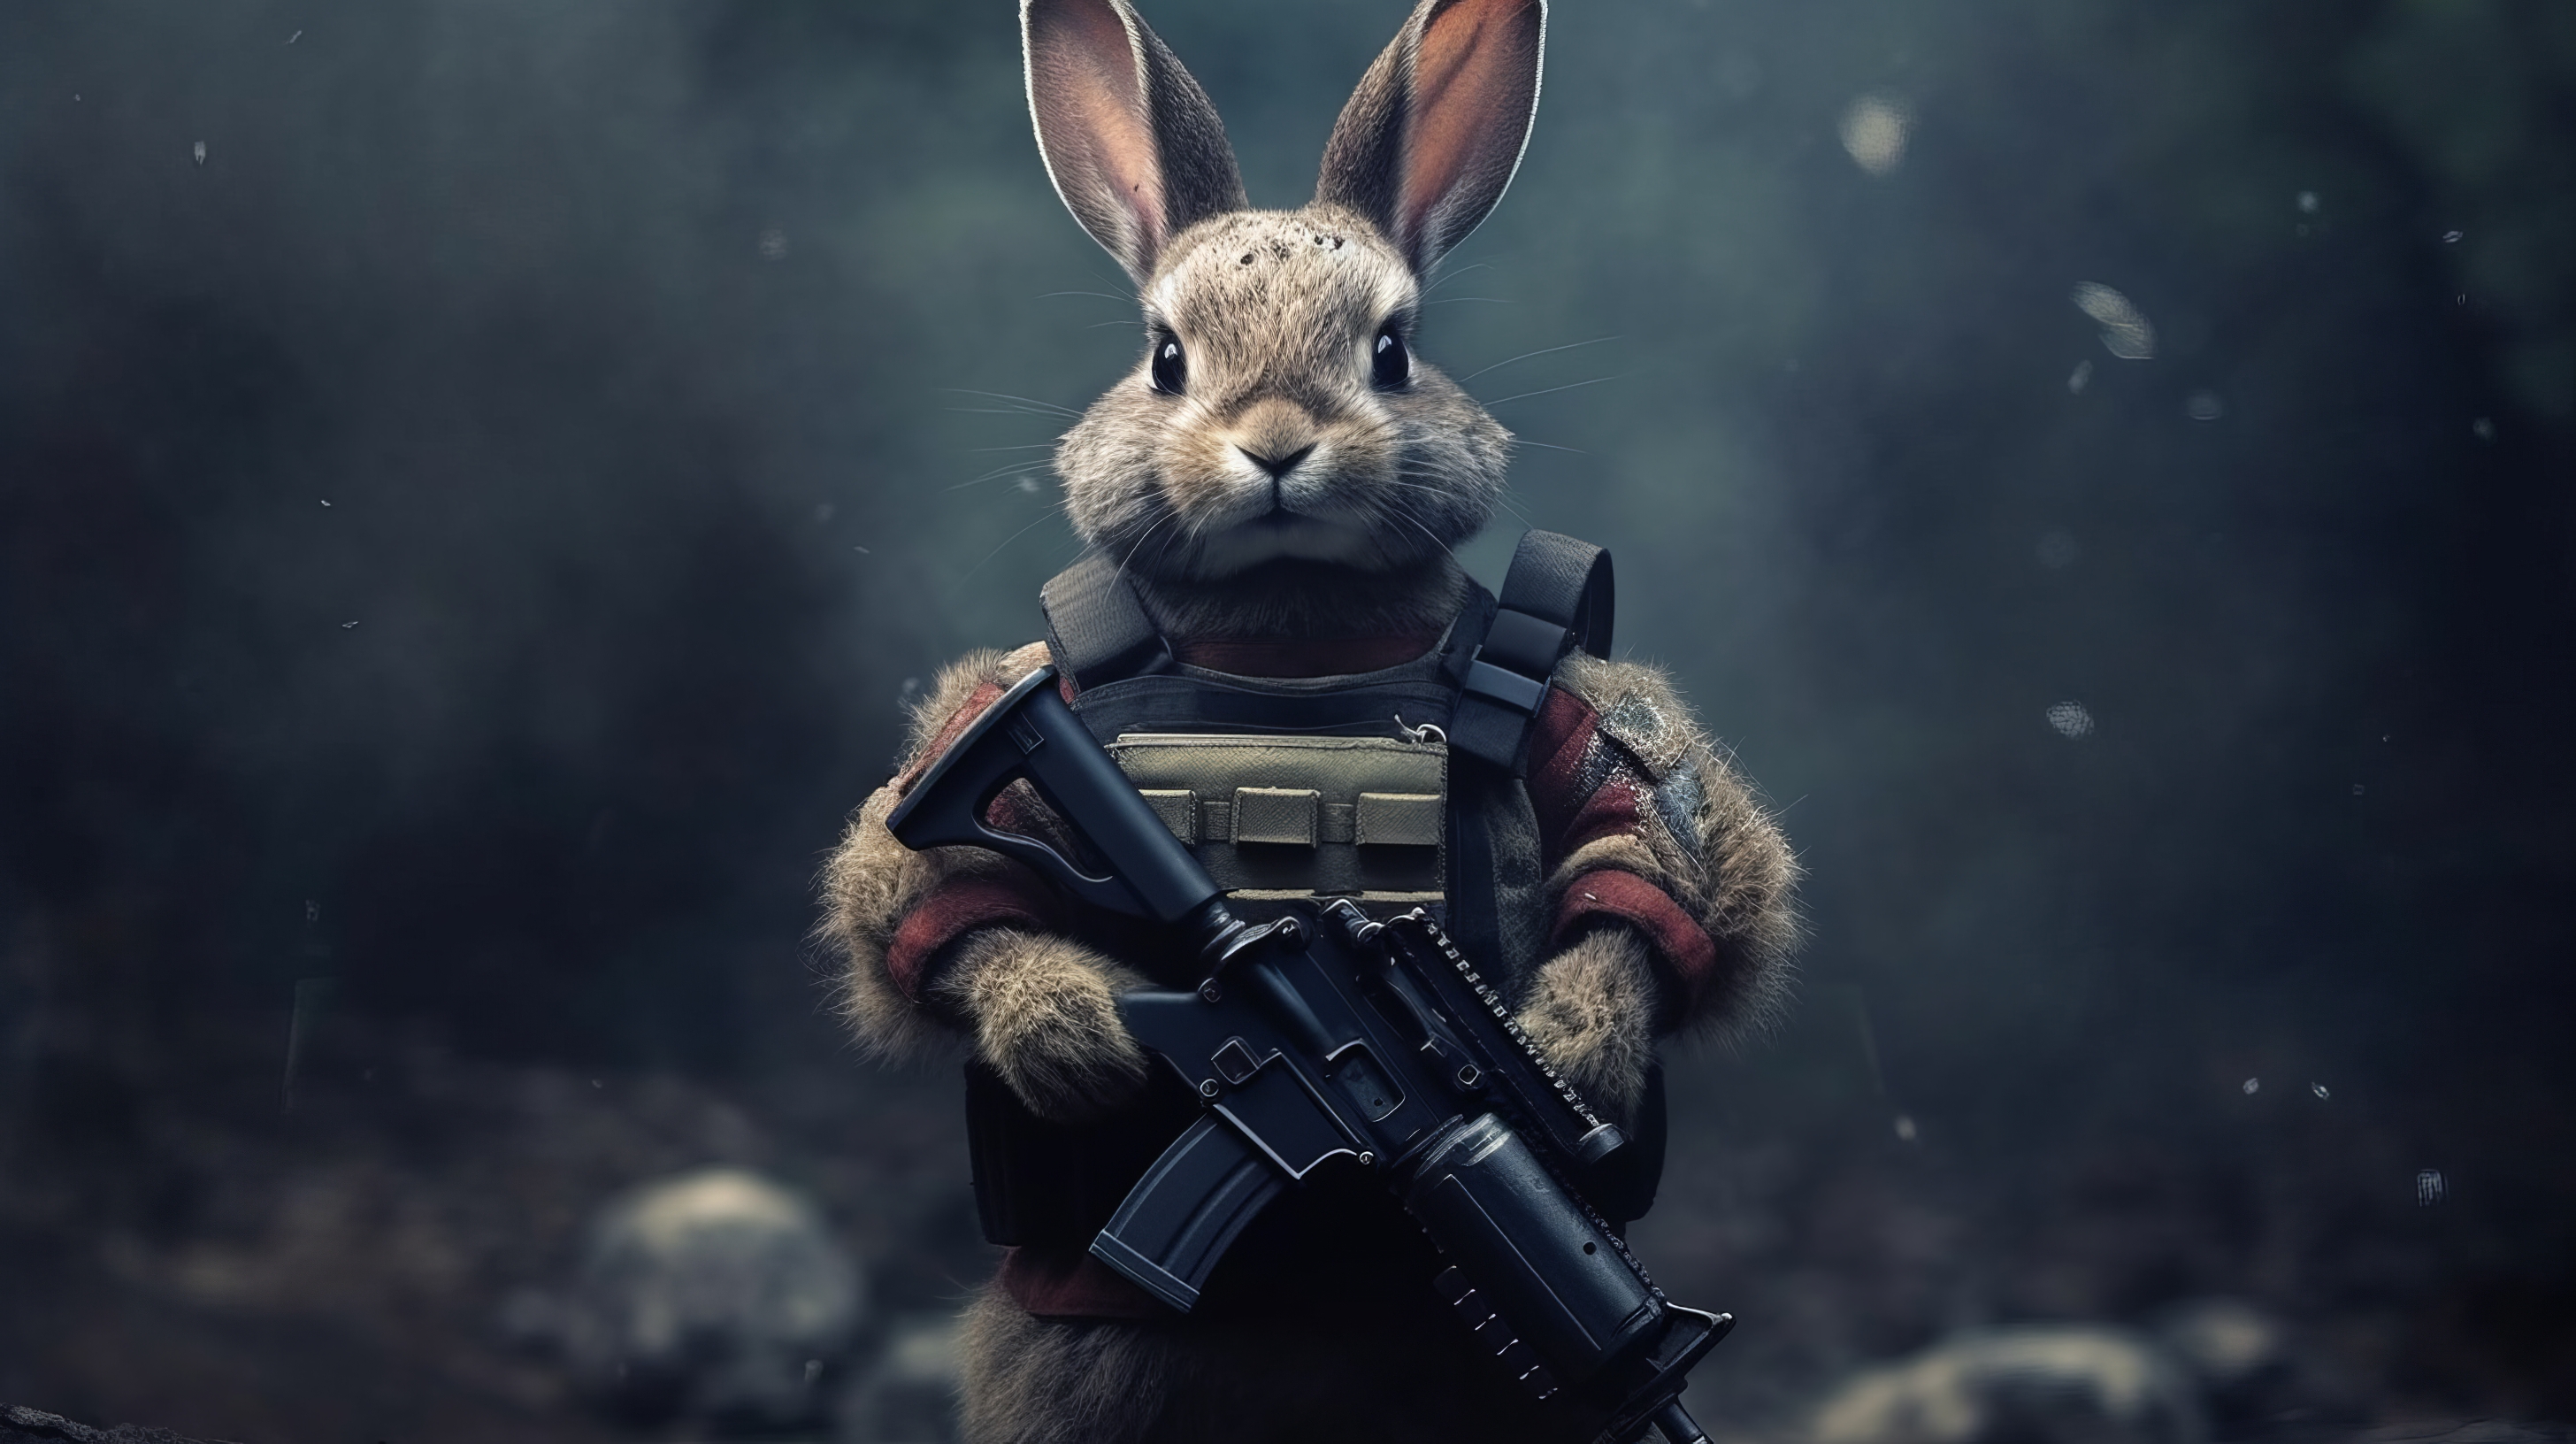 General 2912x1632 AI art rabbits tactical soldier vest gun simple background minimalism animals looking at viewer uniform